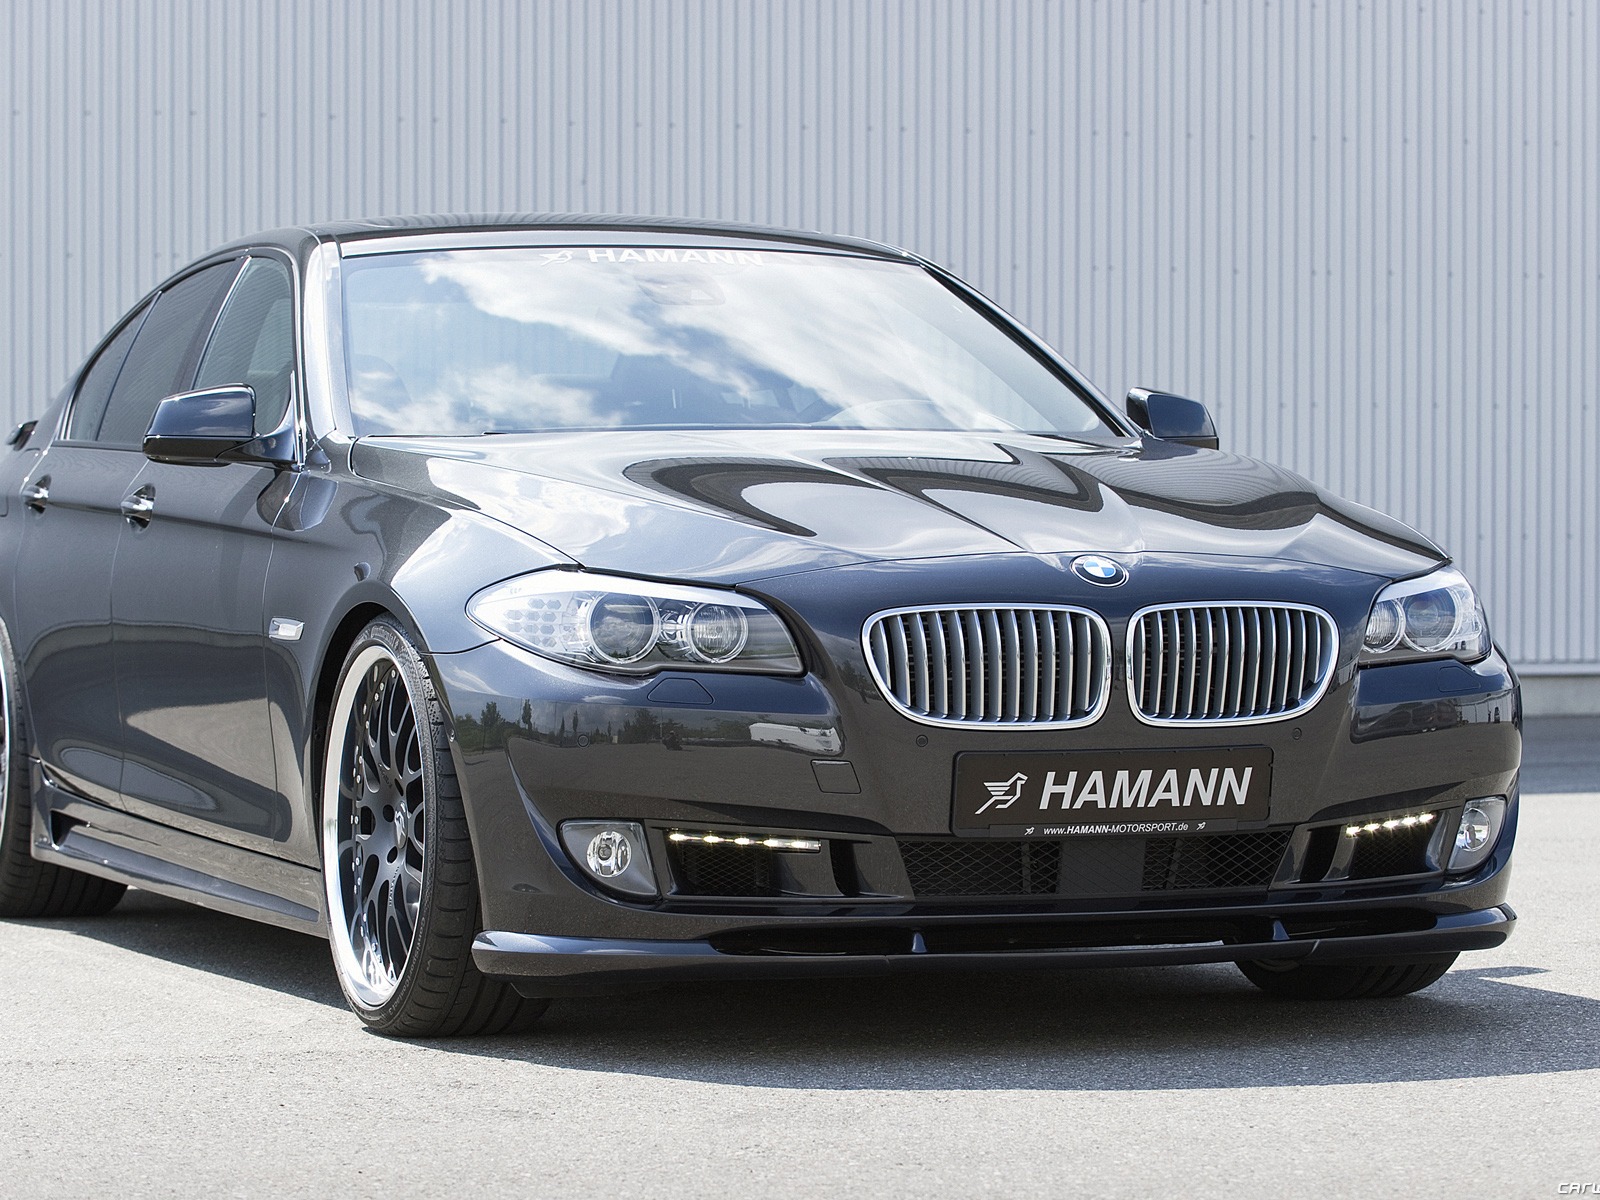 Hamann BMW 5-series F10 - 2010 寶馬 #3 - 1600x1200